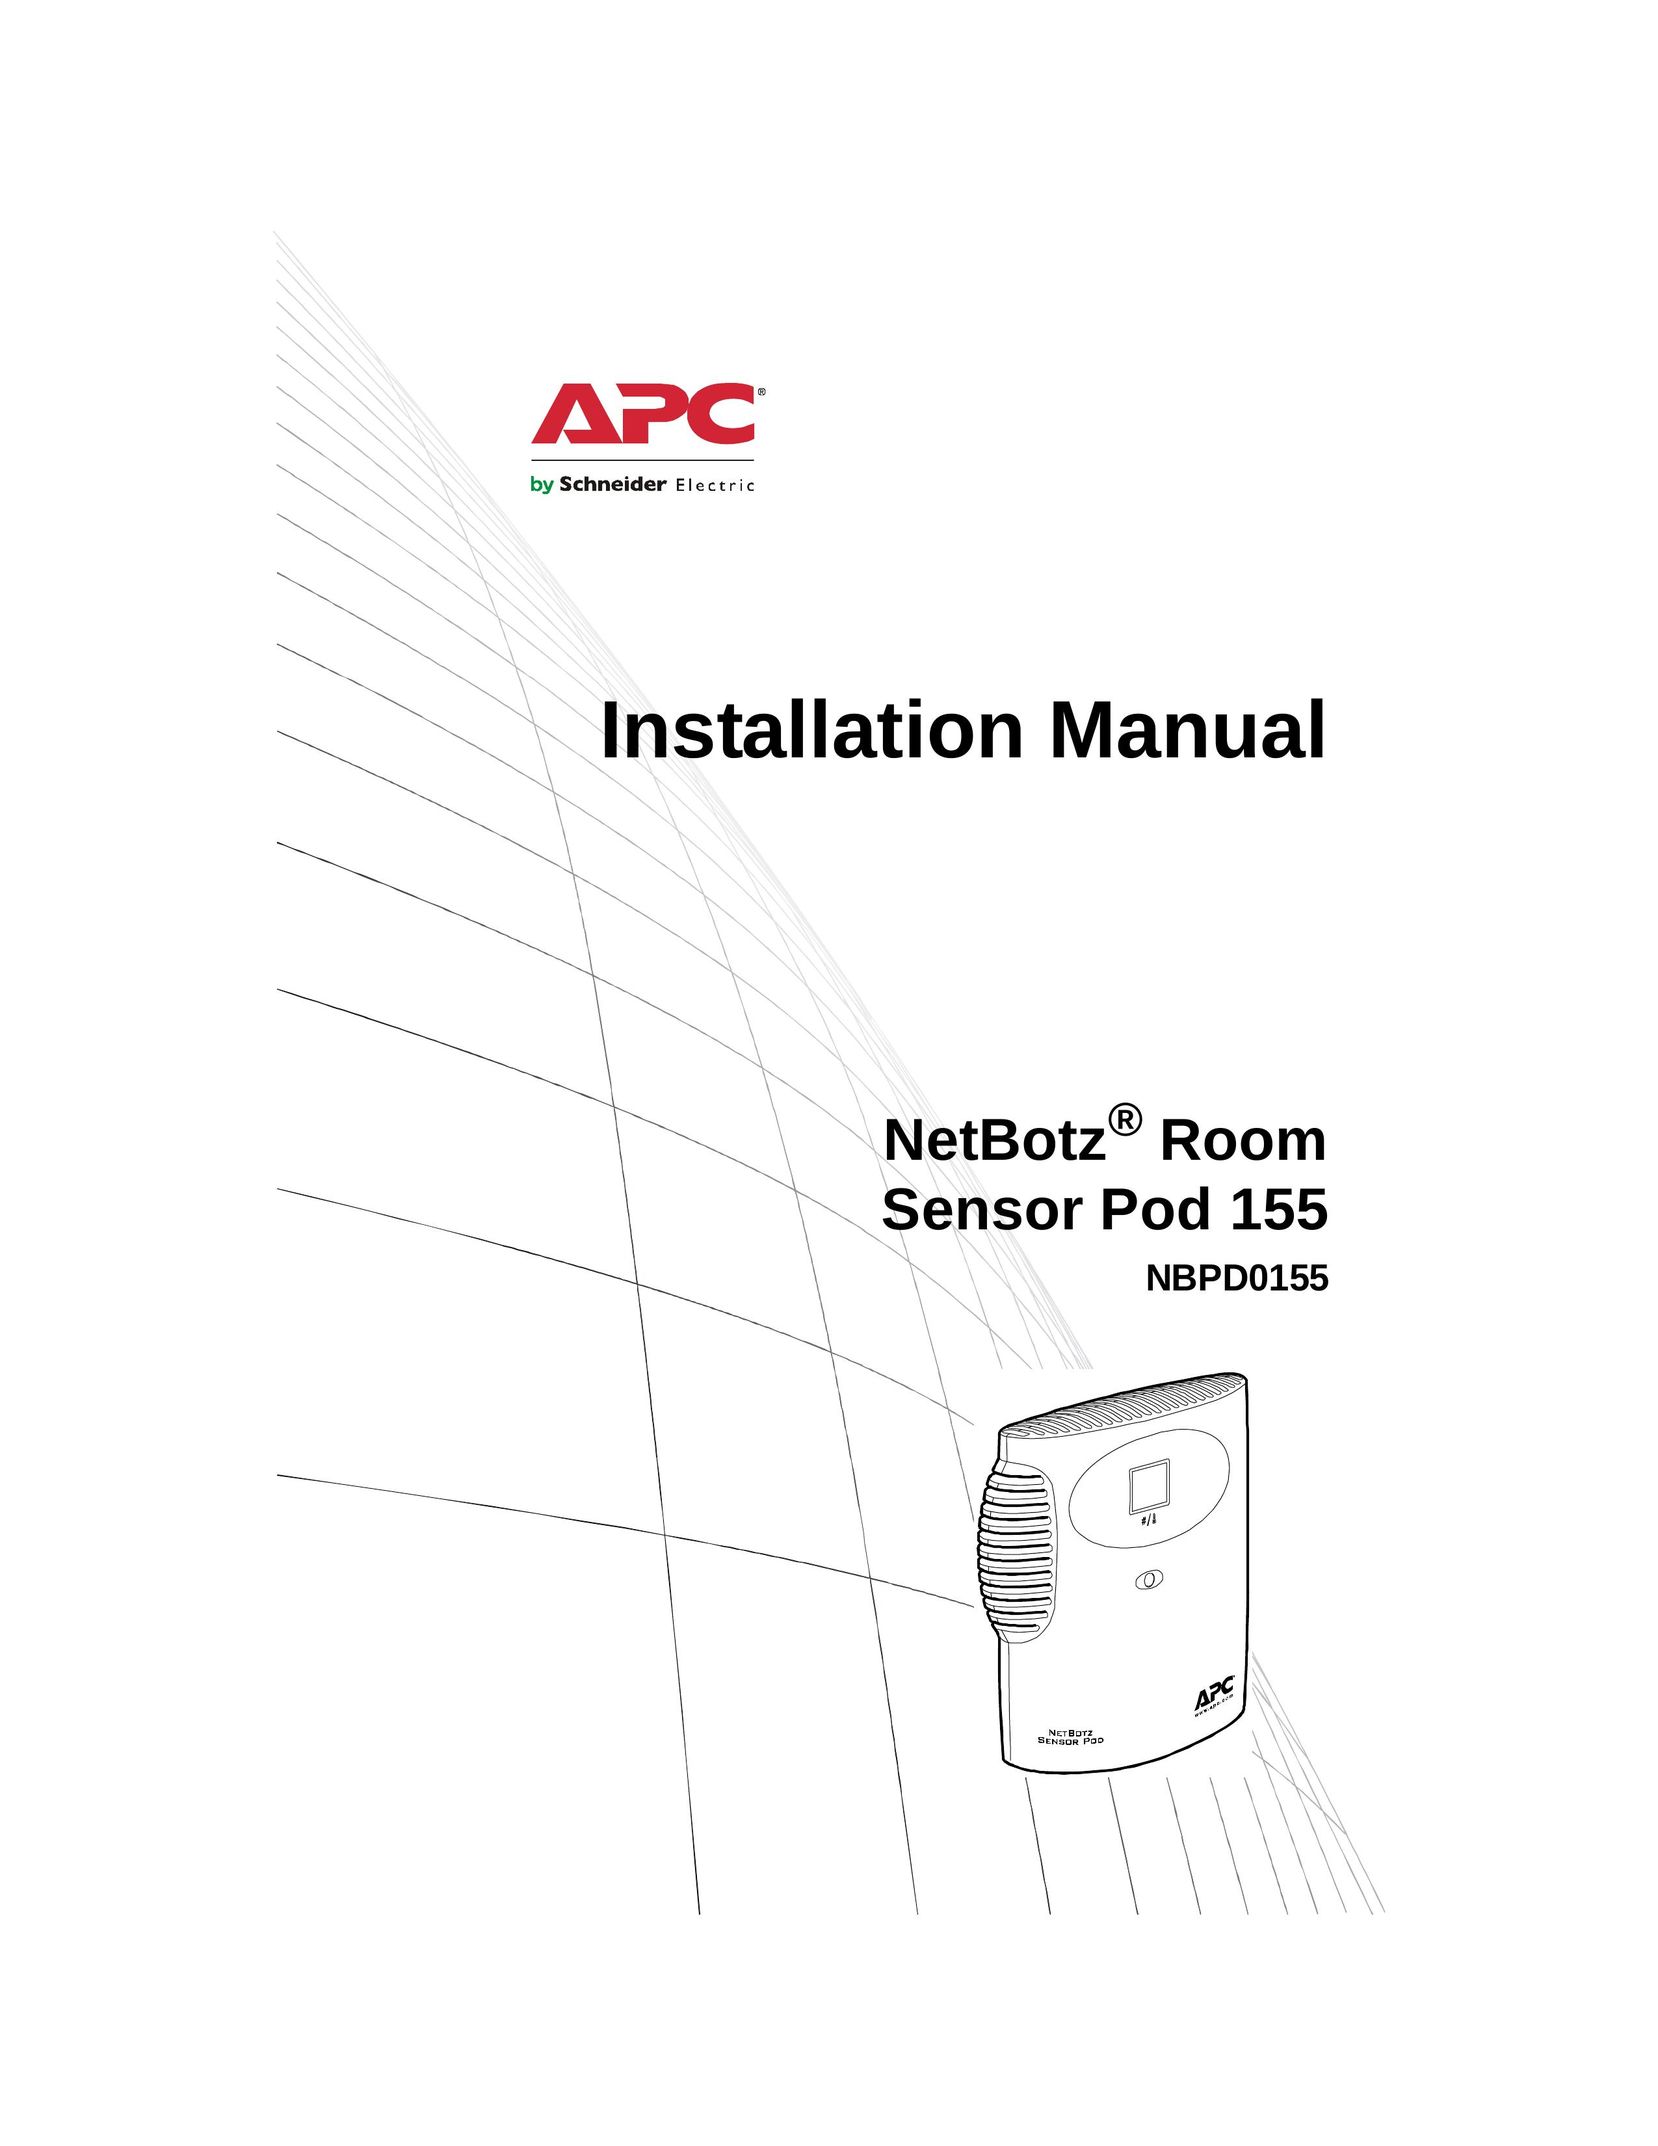 APC NBPD0155 Home Security System User Manual